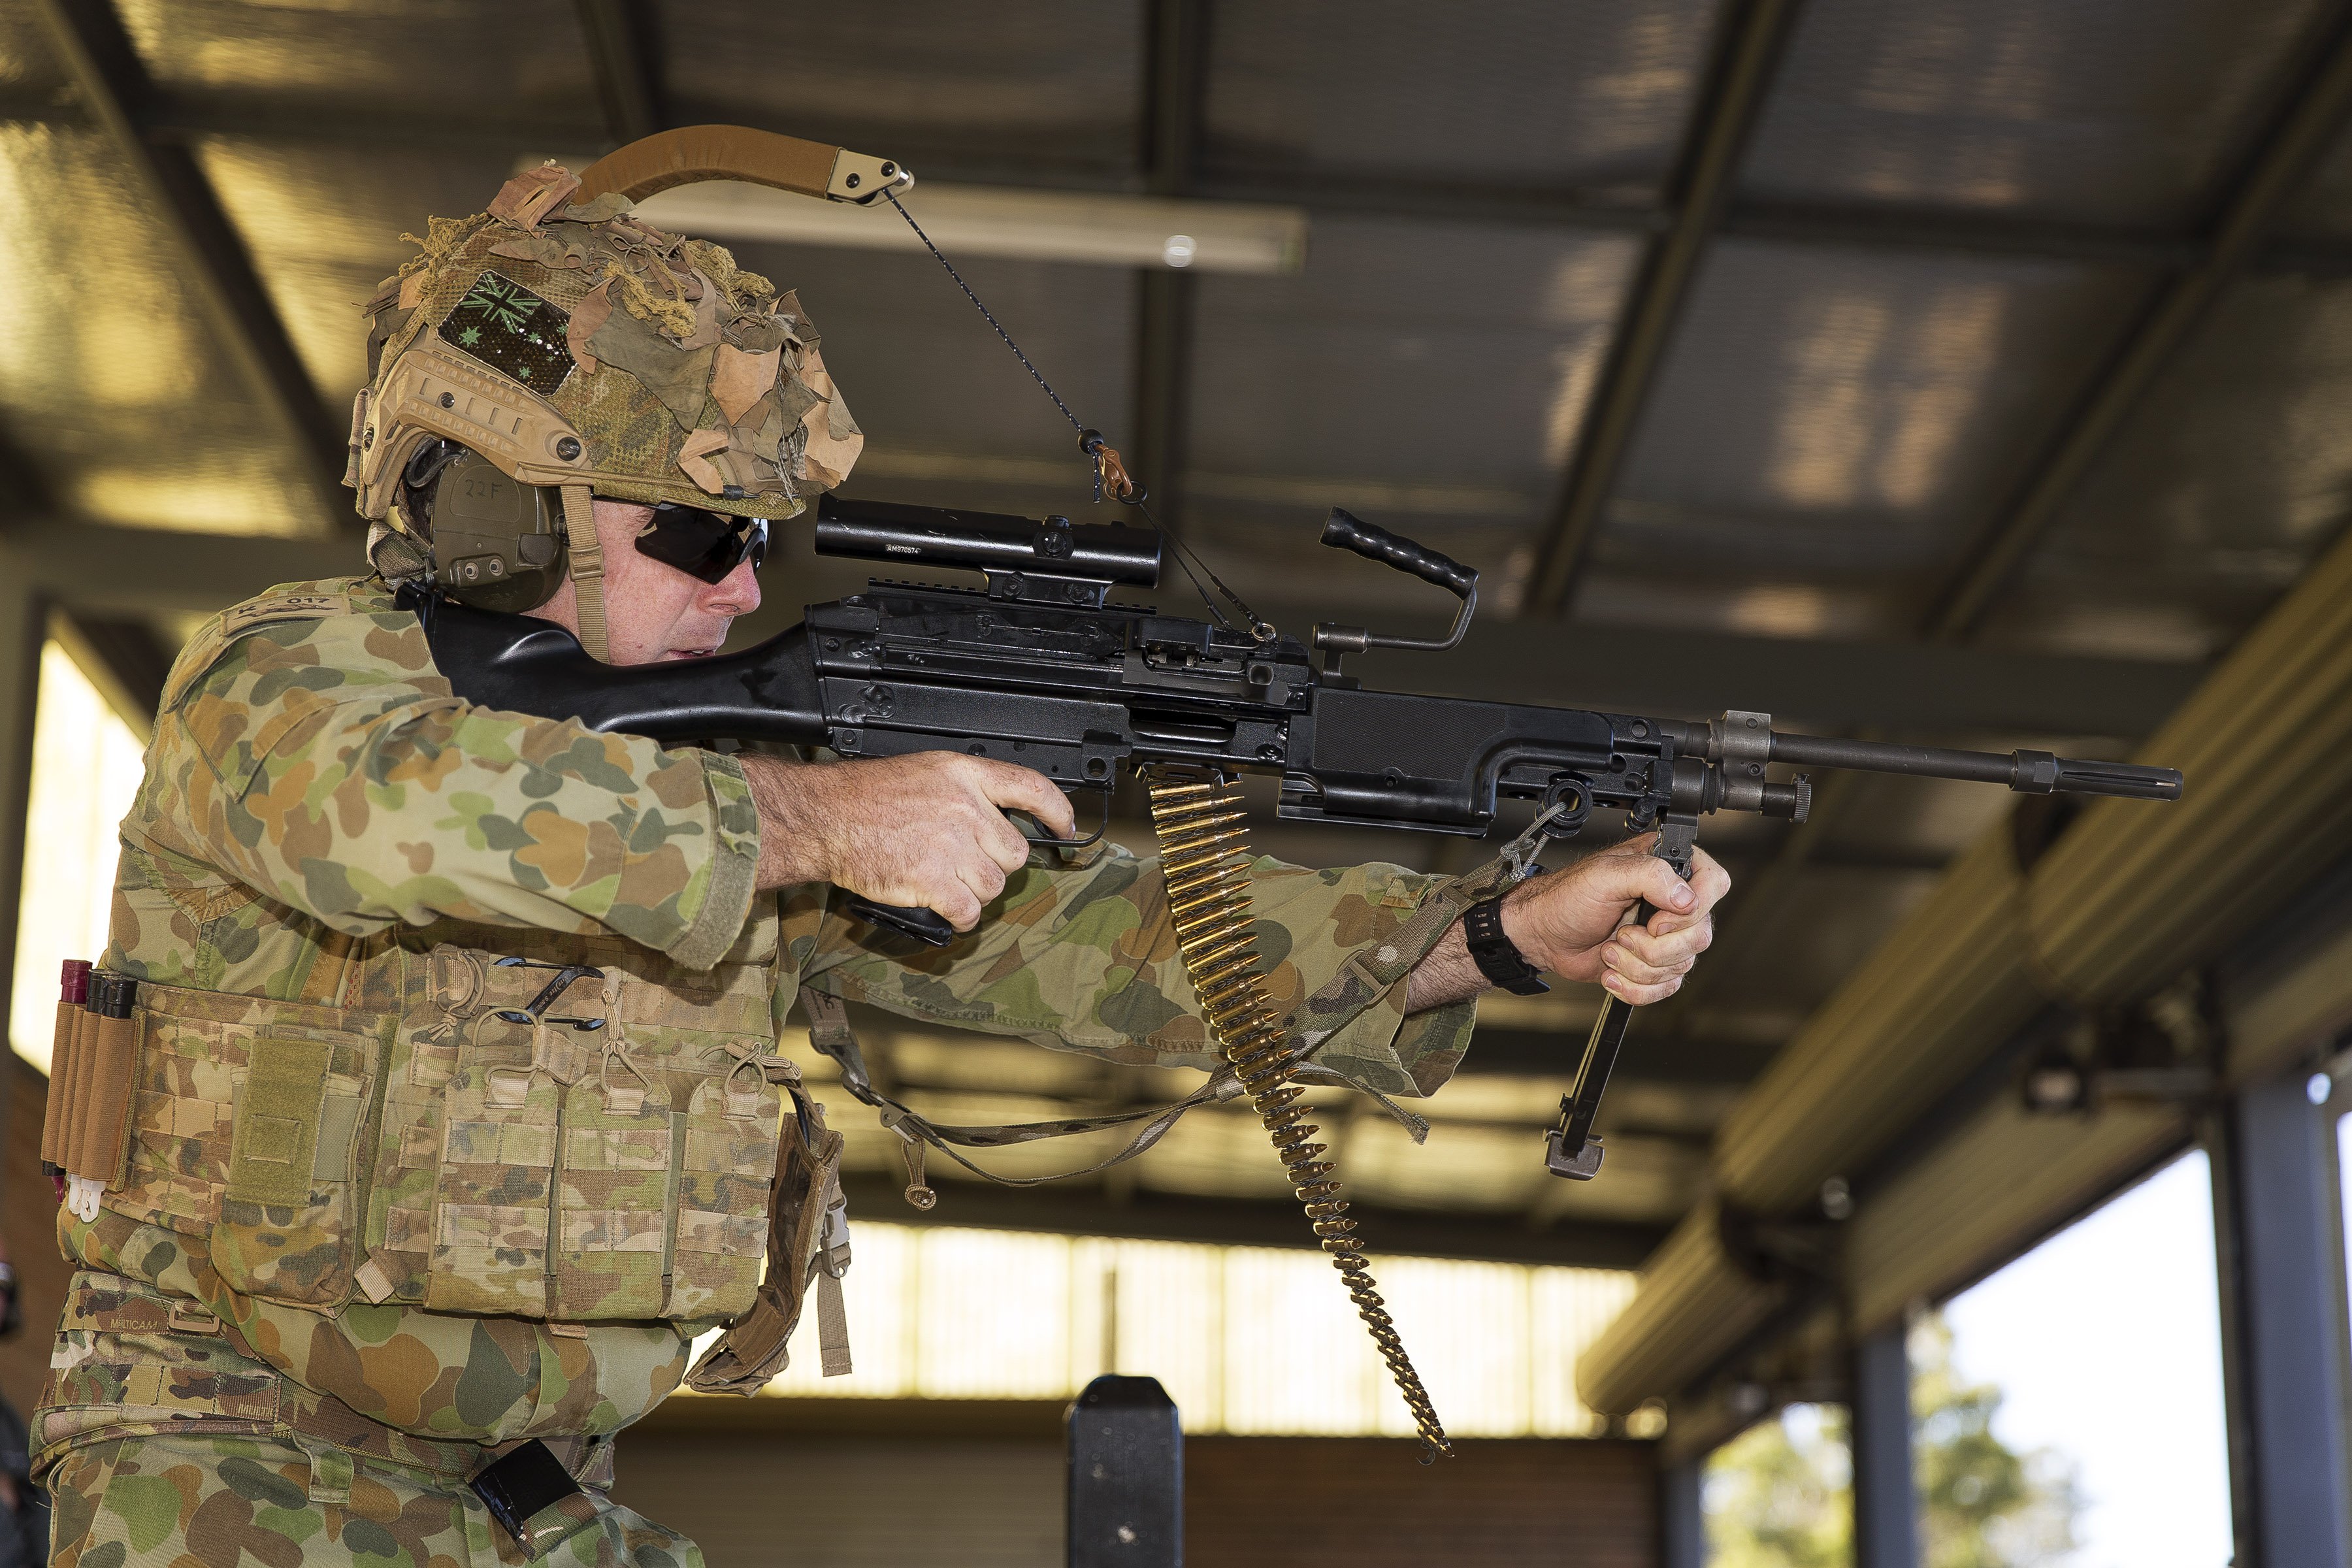 Tom Antonov on X: The Australian #Army's new soldier combat